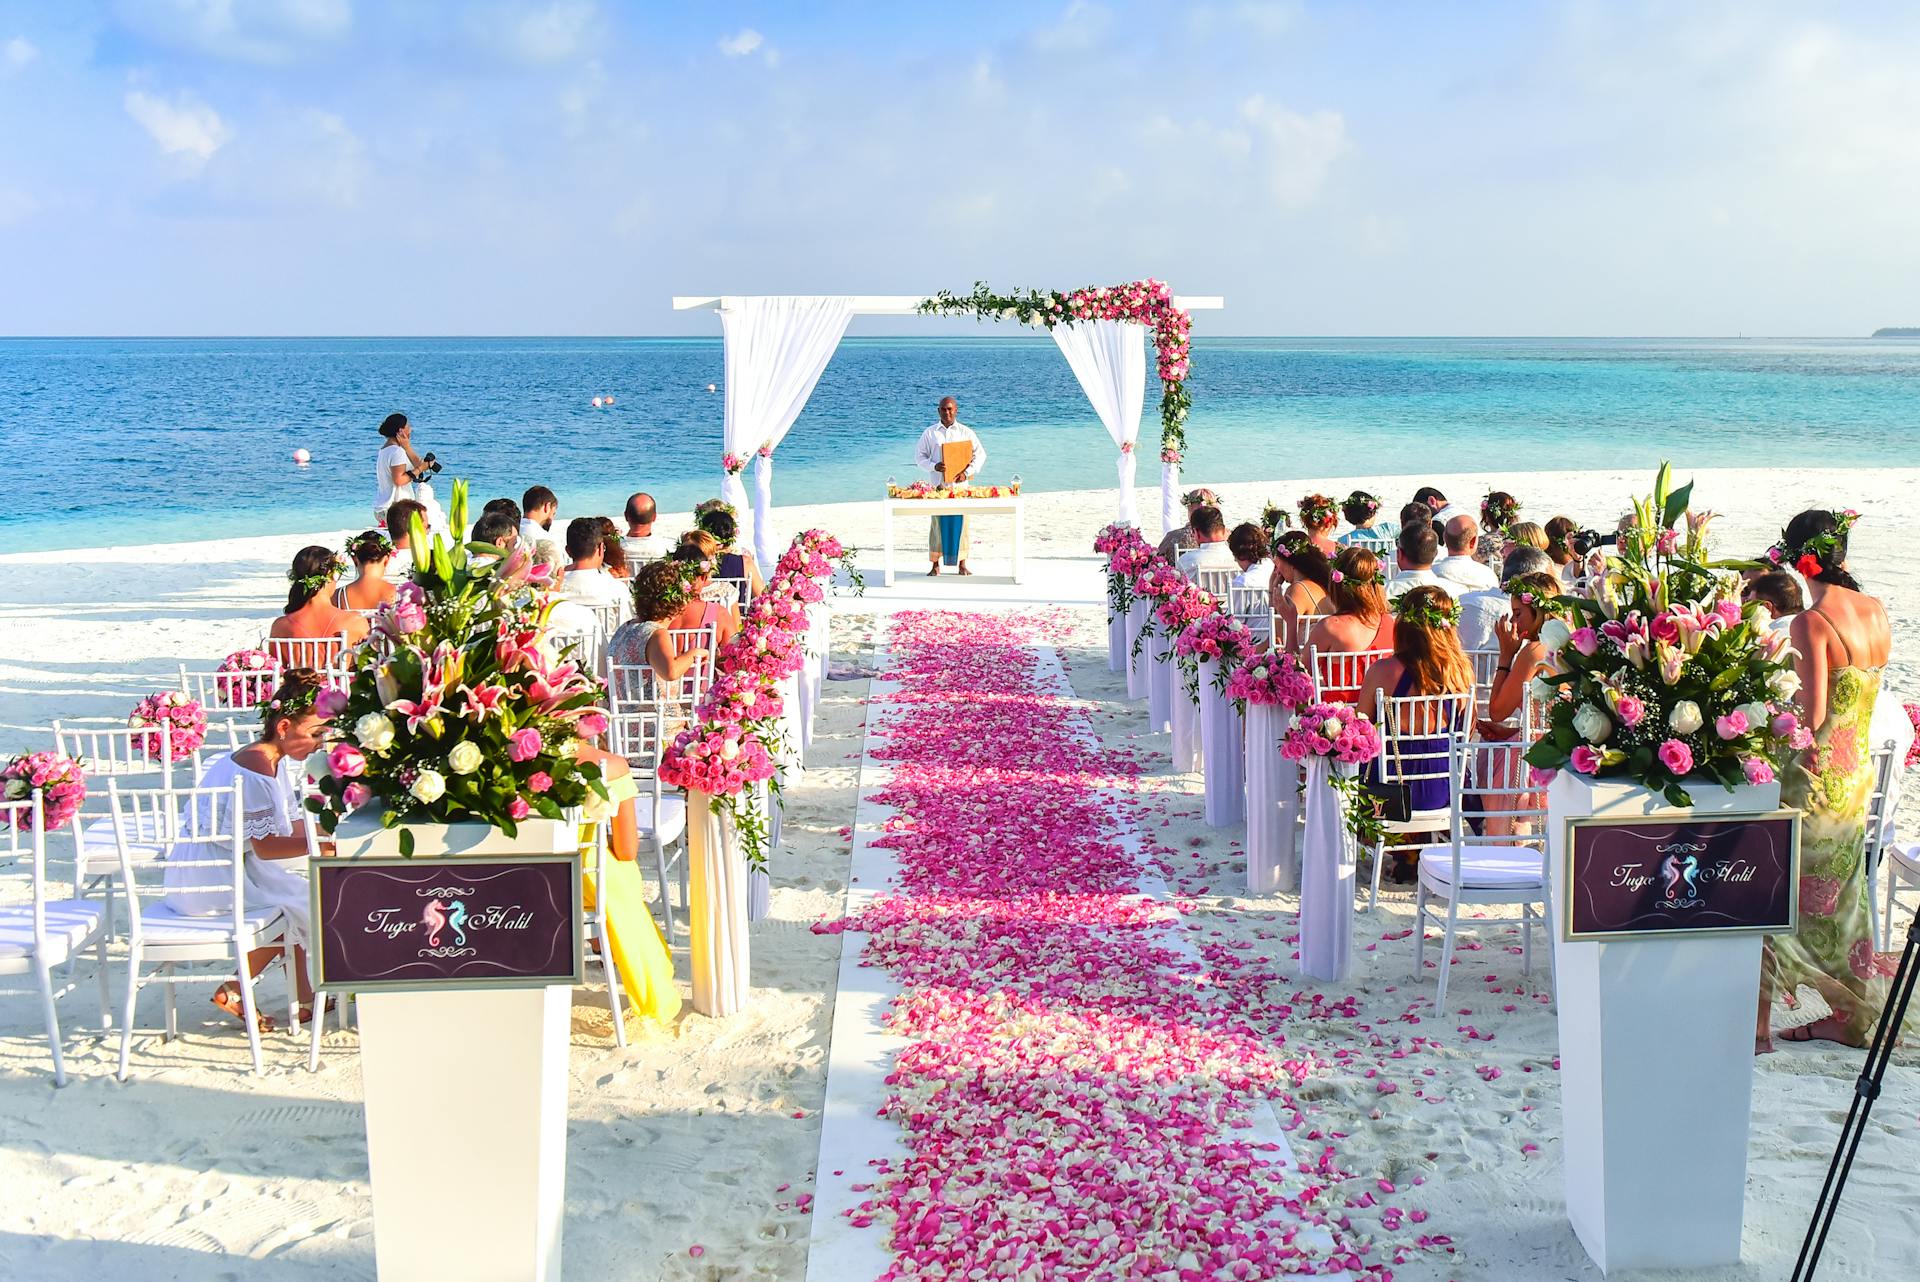 A beach wedding | Source: Pexels